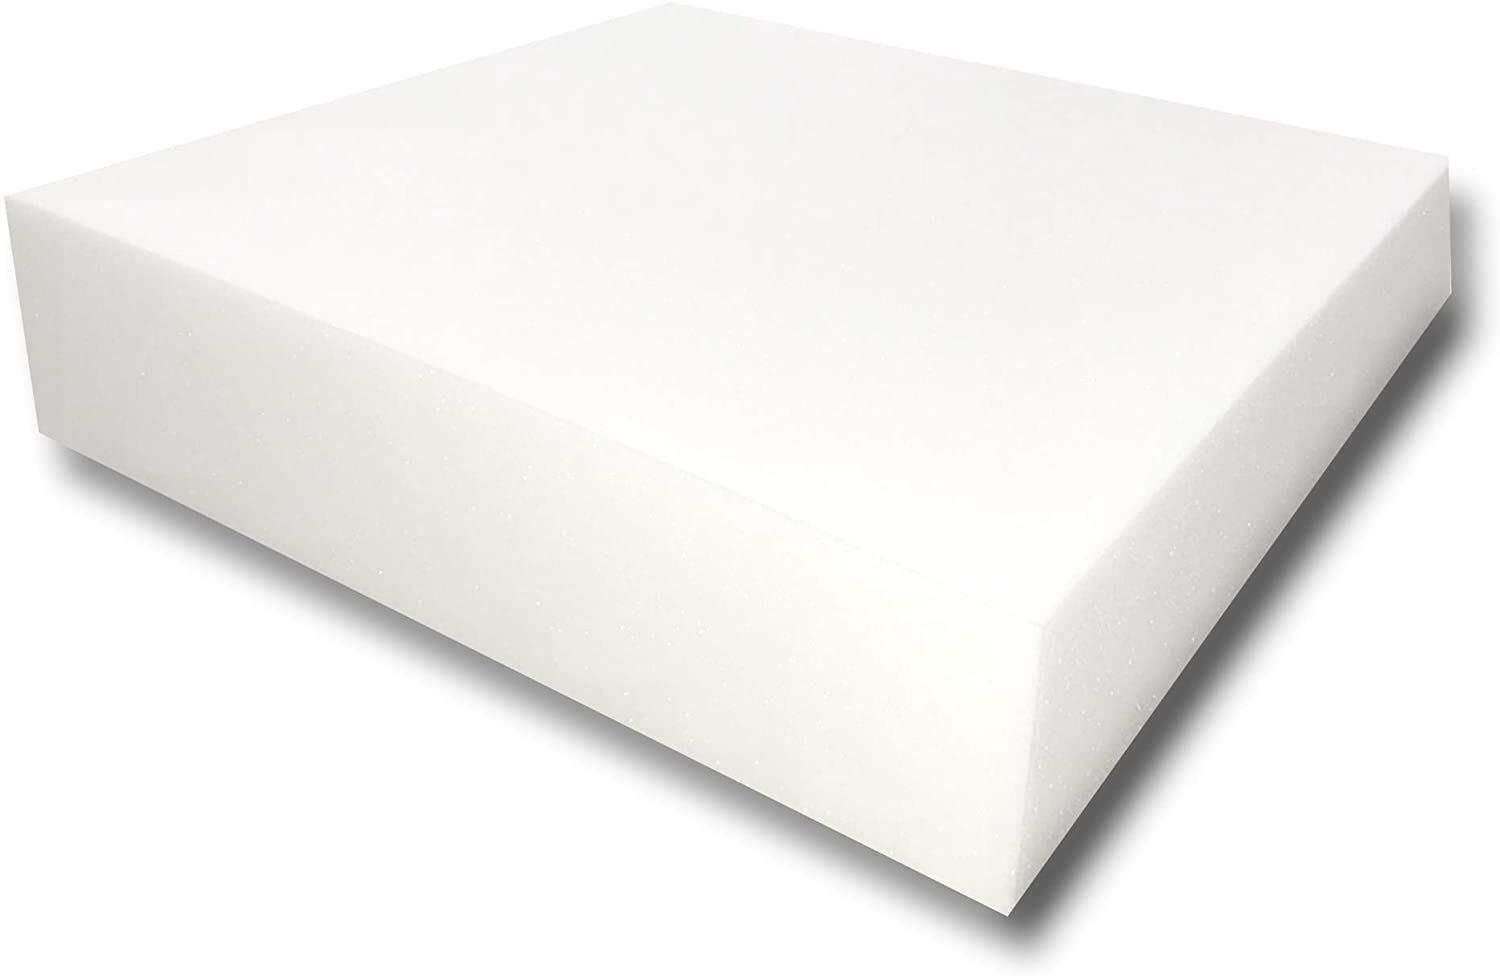 2x 24 x 72 White Foam Upholstery Sheet with Medium Density Foam Pad